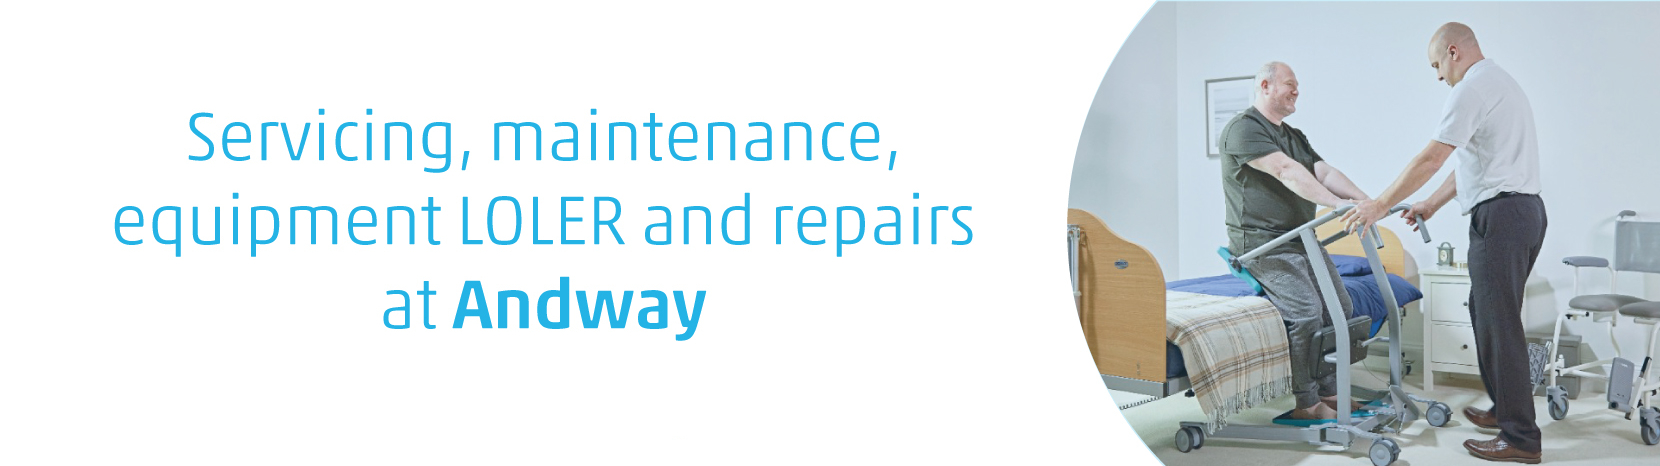 Servicing, maintenance, equipment LOLER and repairs at Andway